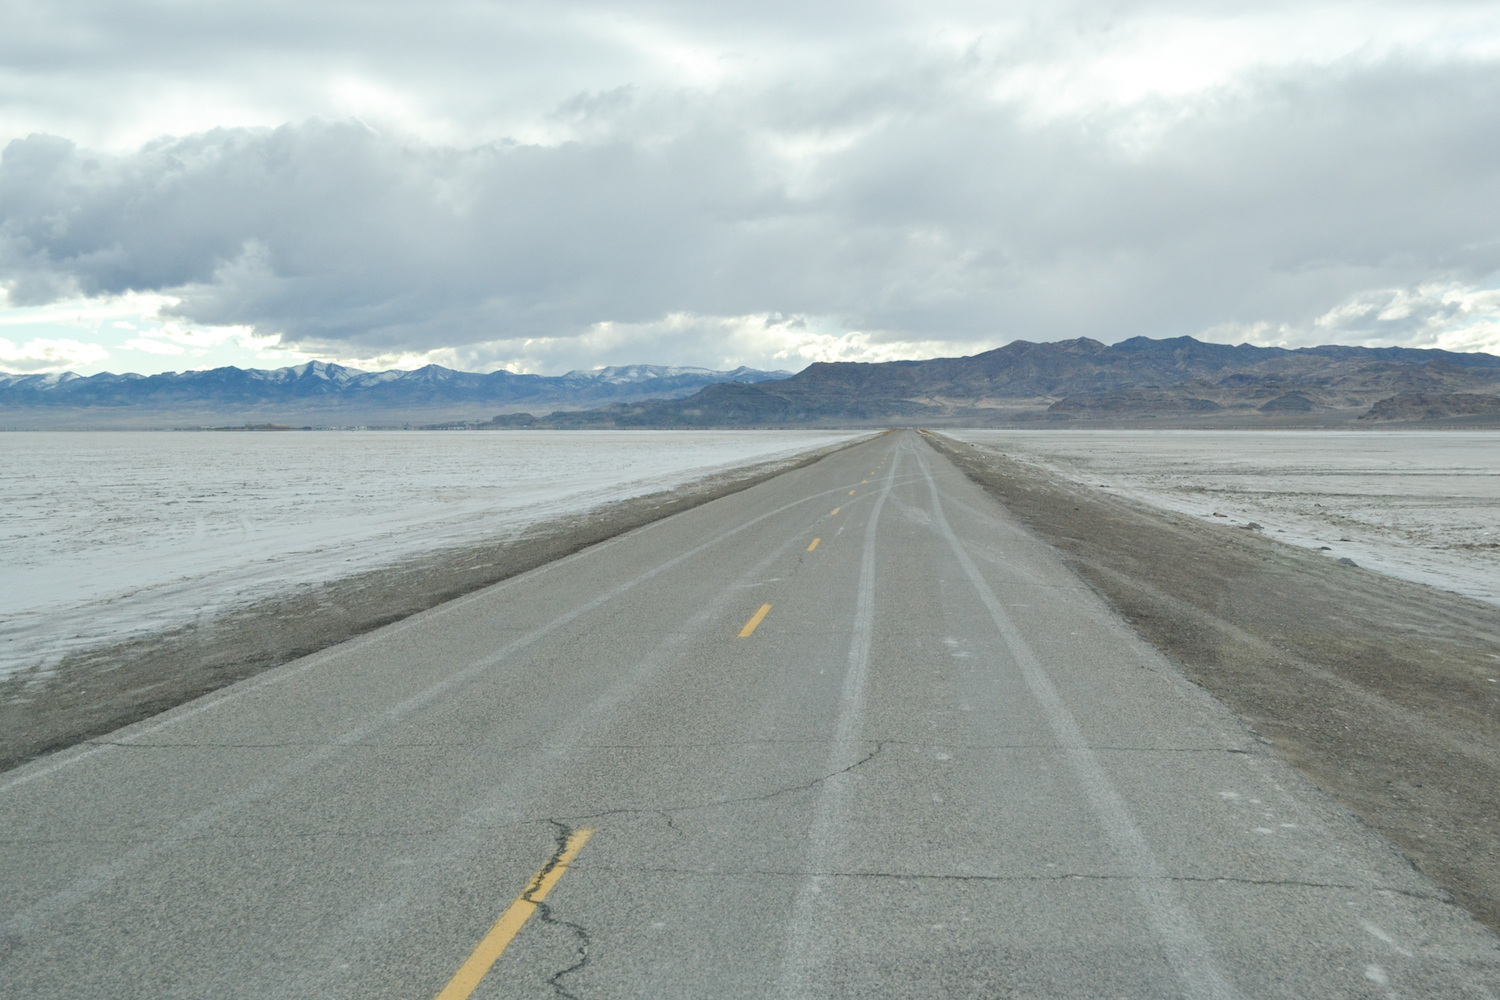 The road through the salt plains in Utah.